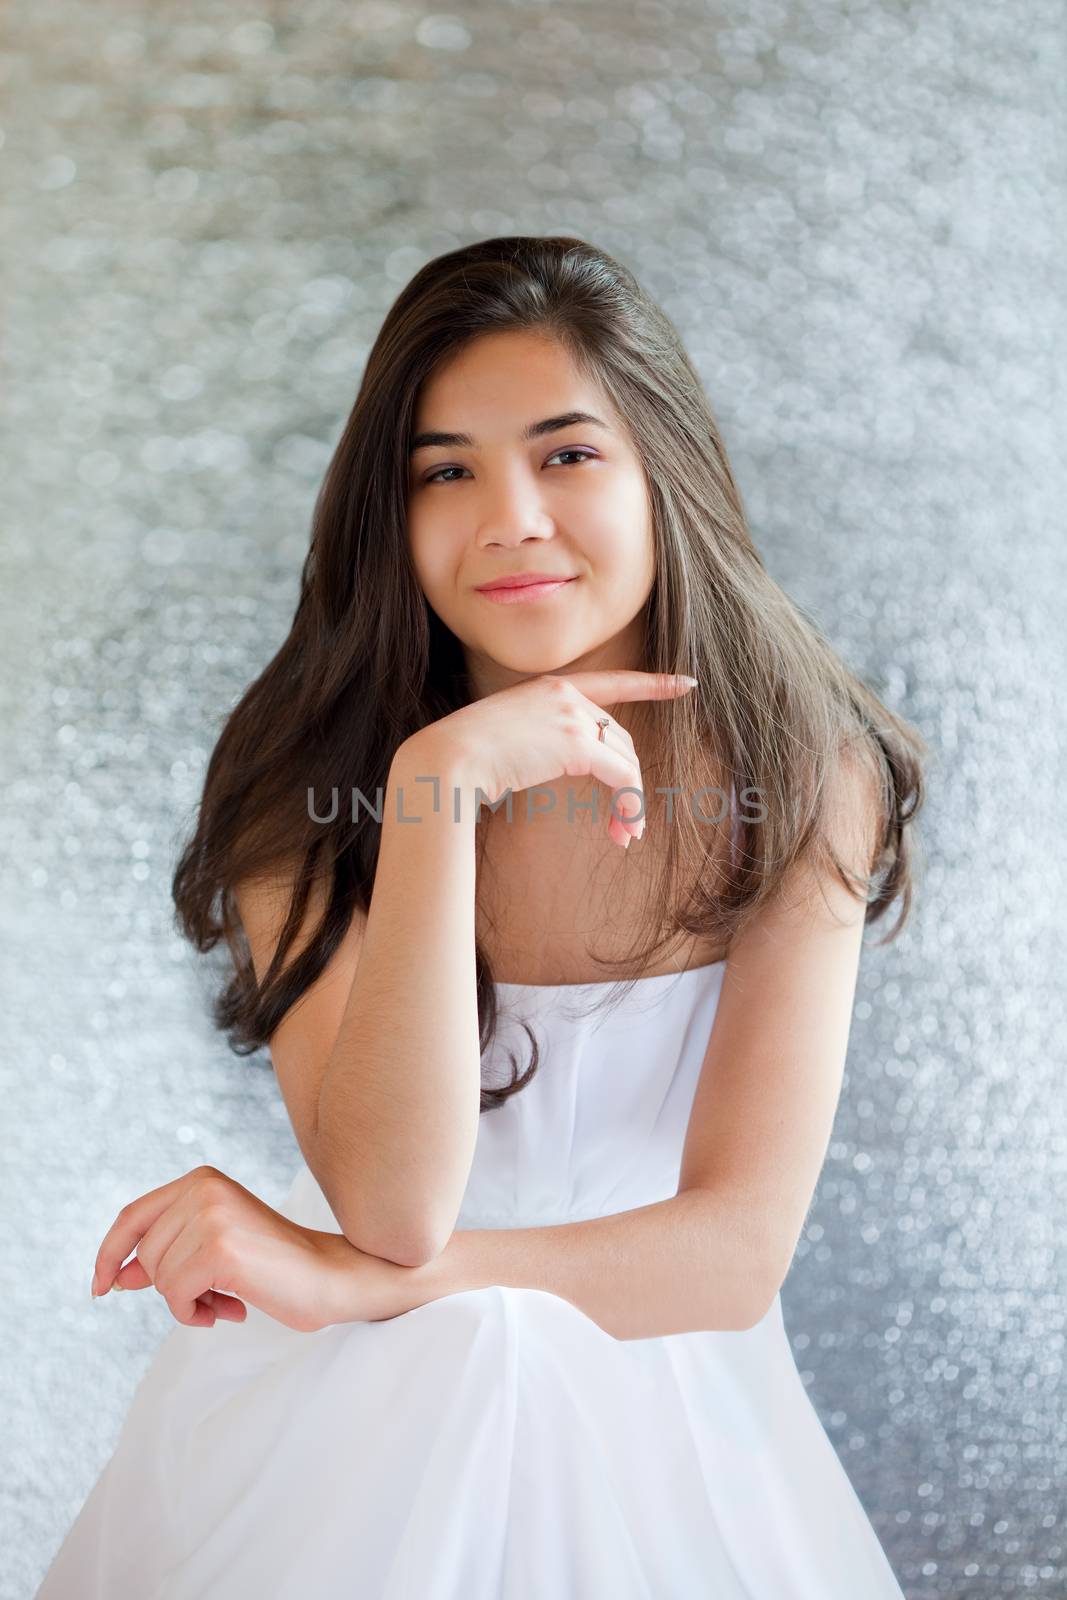 Beautiful biracial teen girl in white dress sitting, thinking by jarenwicklund